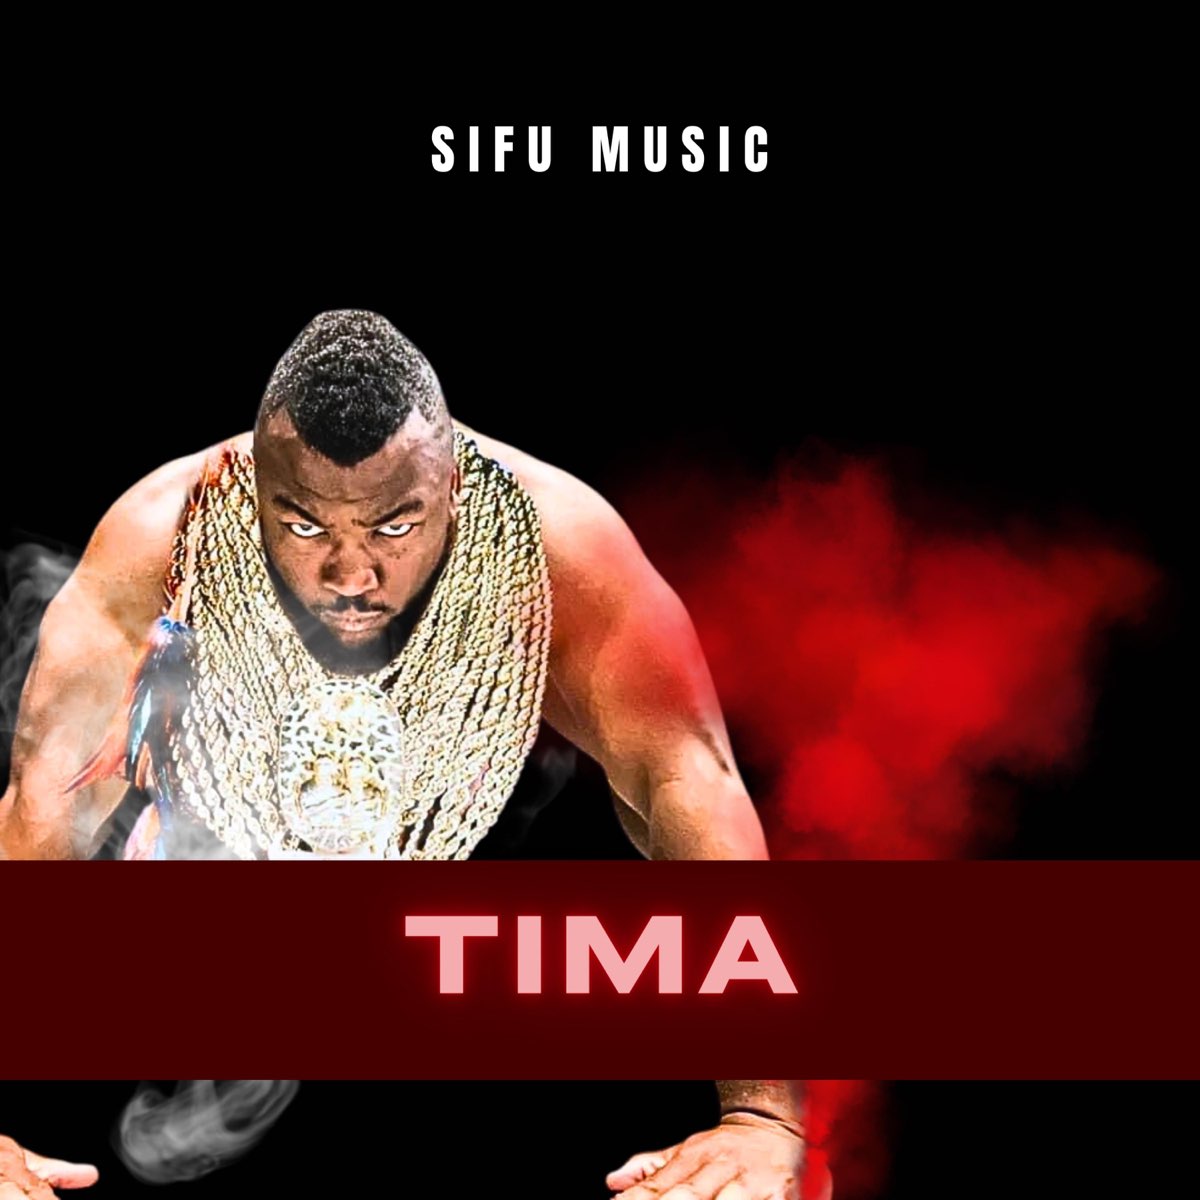 TiMa - Single - Album by Sifu Music - Apple Music